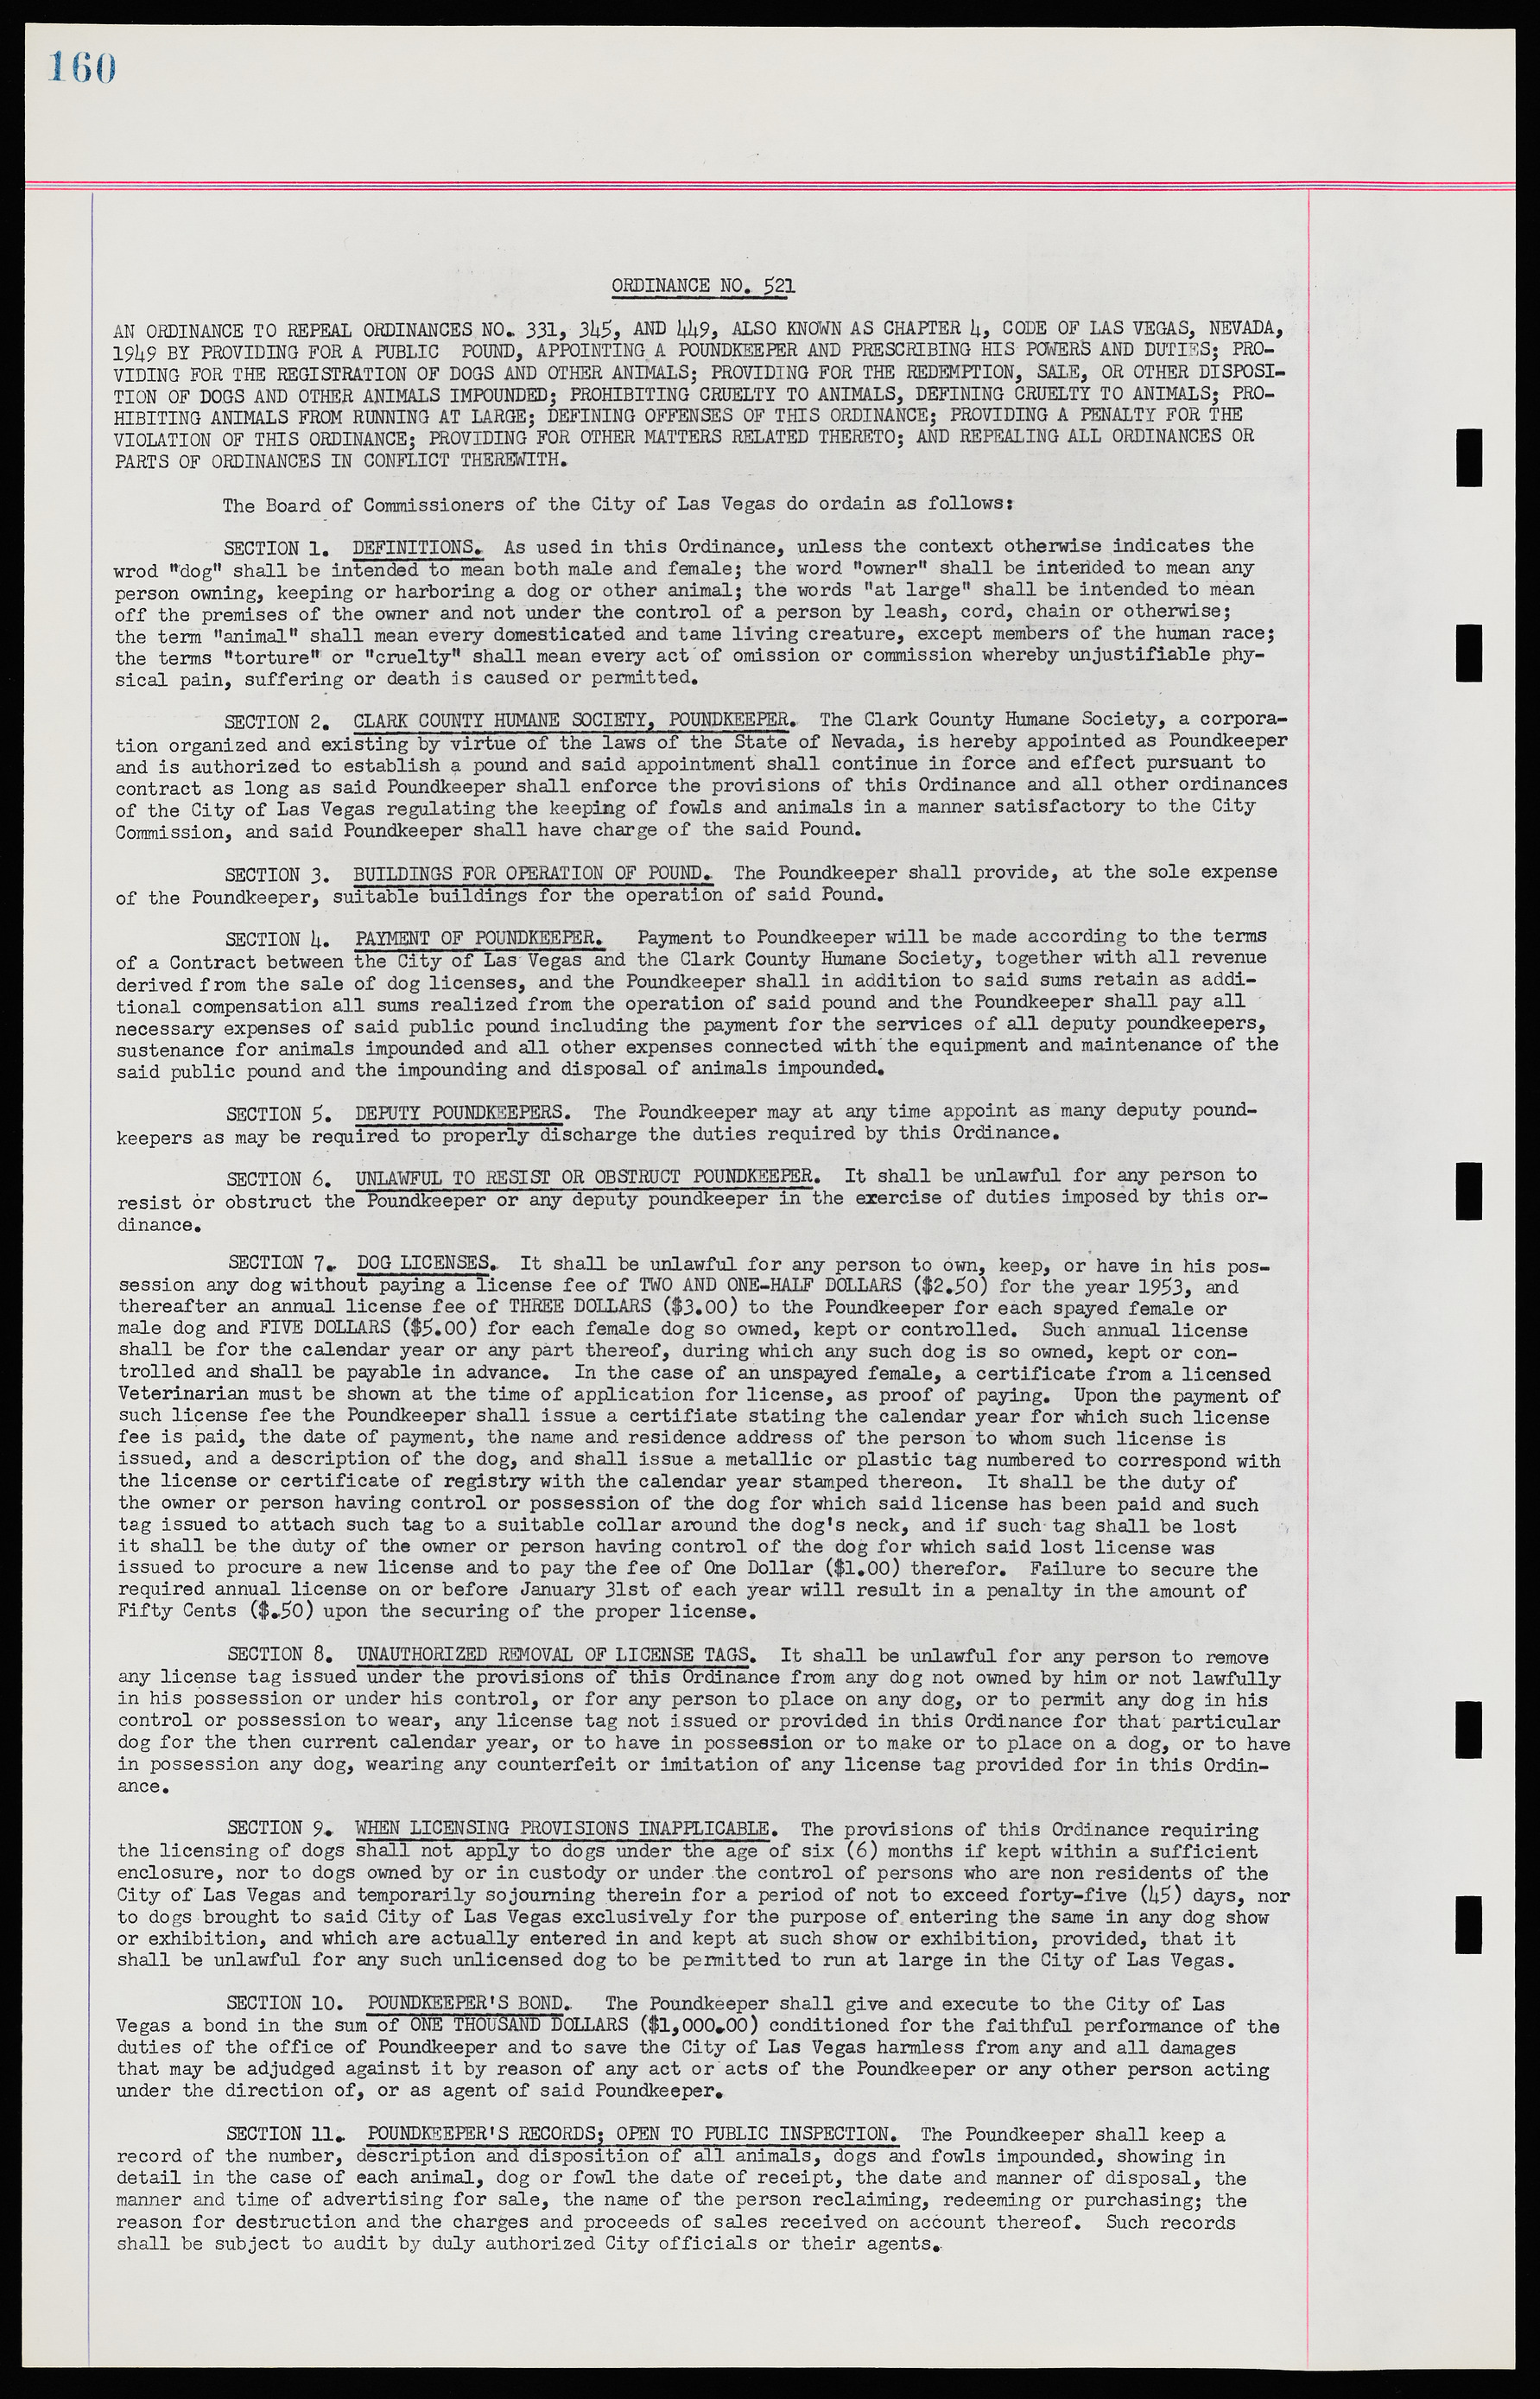 Las Vegas City Ordinances, November 13, 1950 to August 6, 1958, lvc000015-168